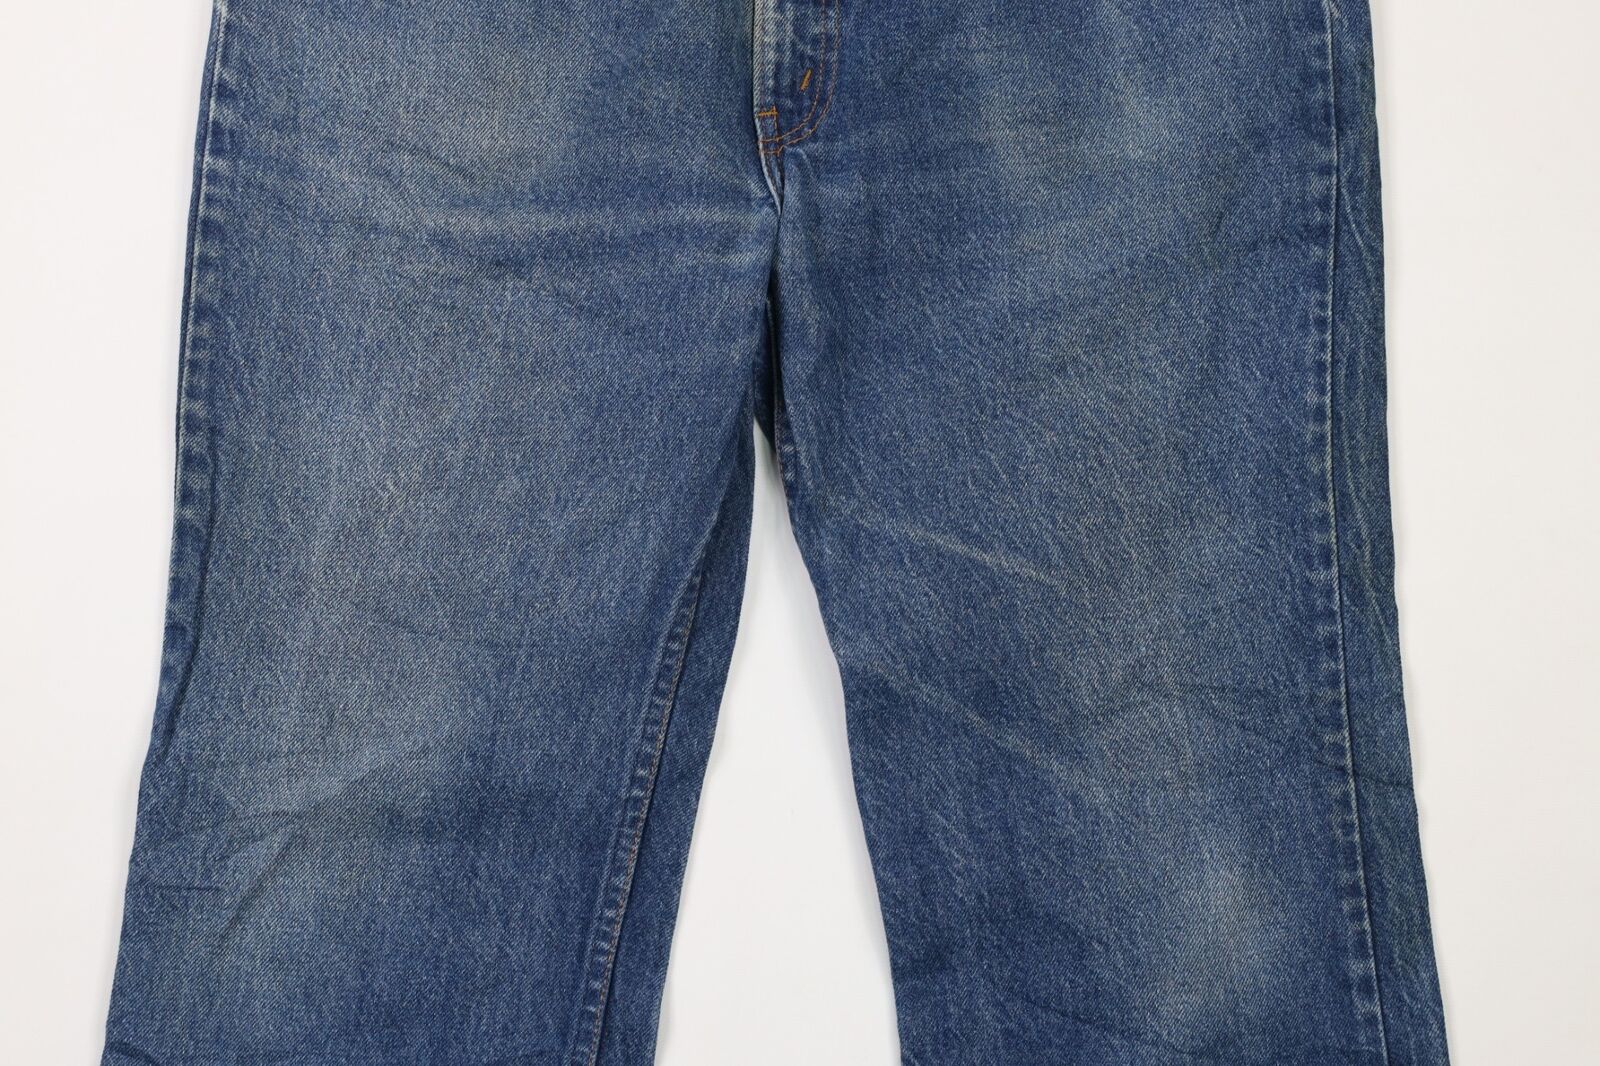 Vintage 90s Levis 517 Orange Tab Mens 36x30 Distressed Flared Bootcut Jeans USA